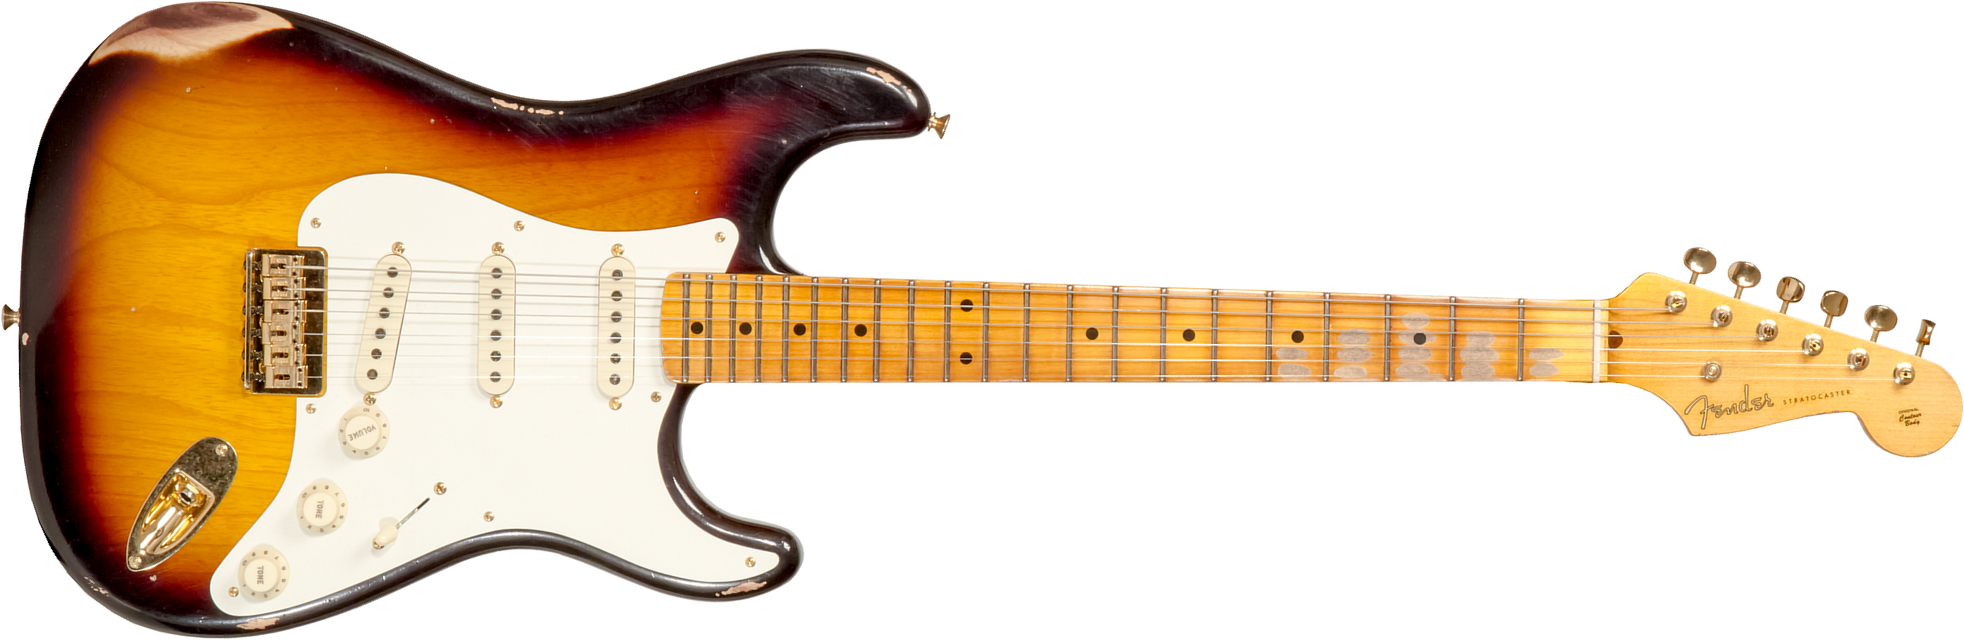 Fender Custom Shop Strat 1956 Hardtail Gold Hardware 3s Ht Mn #cz565119 - Relic Faded 2-color Sunburst - E-Gitarre in Str-Form - Main picture